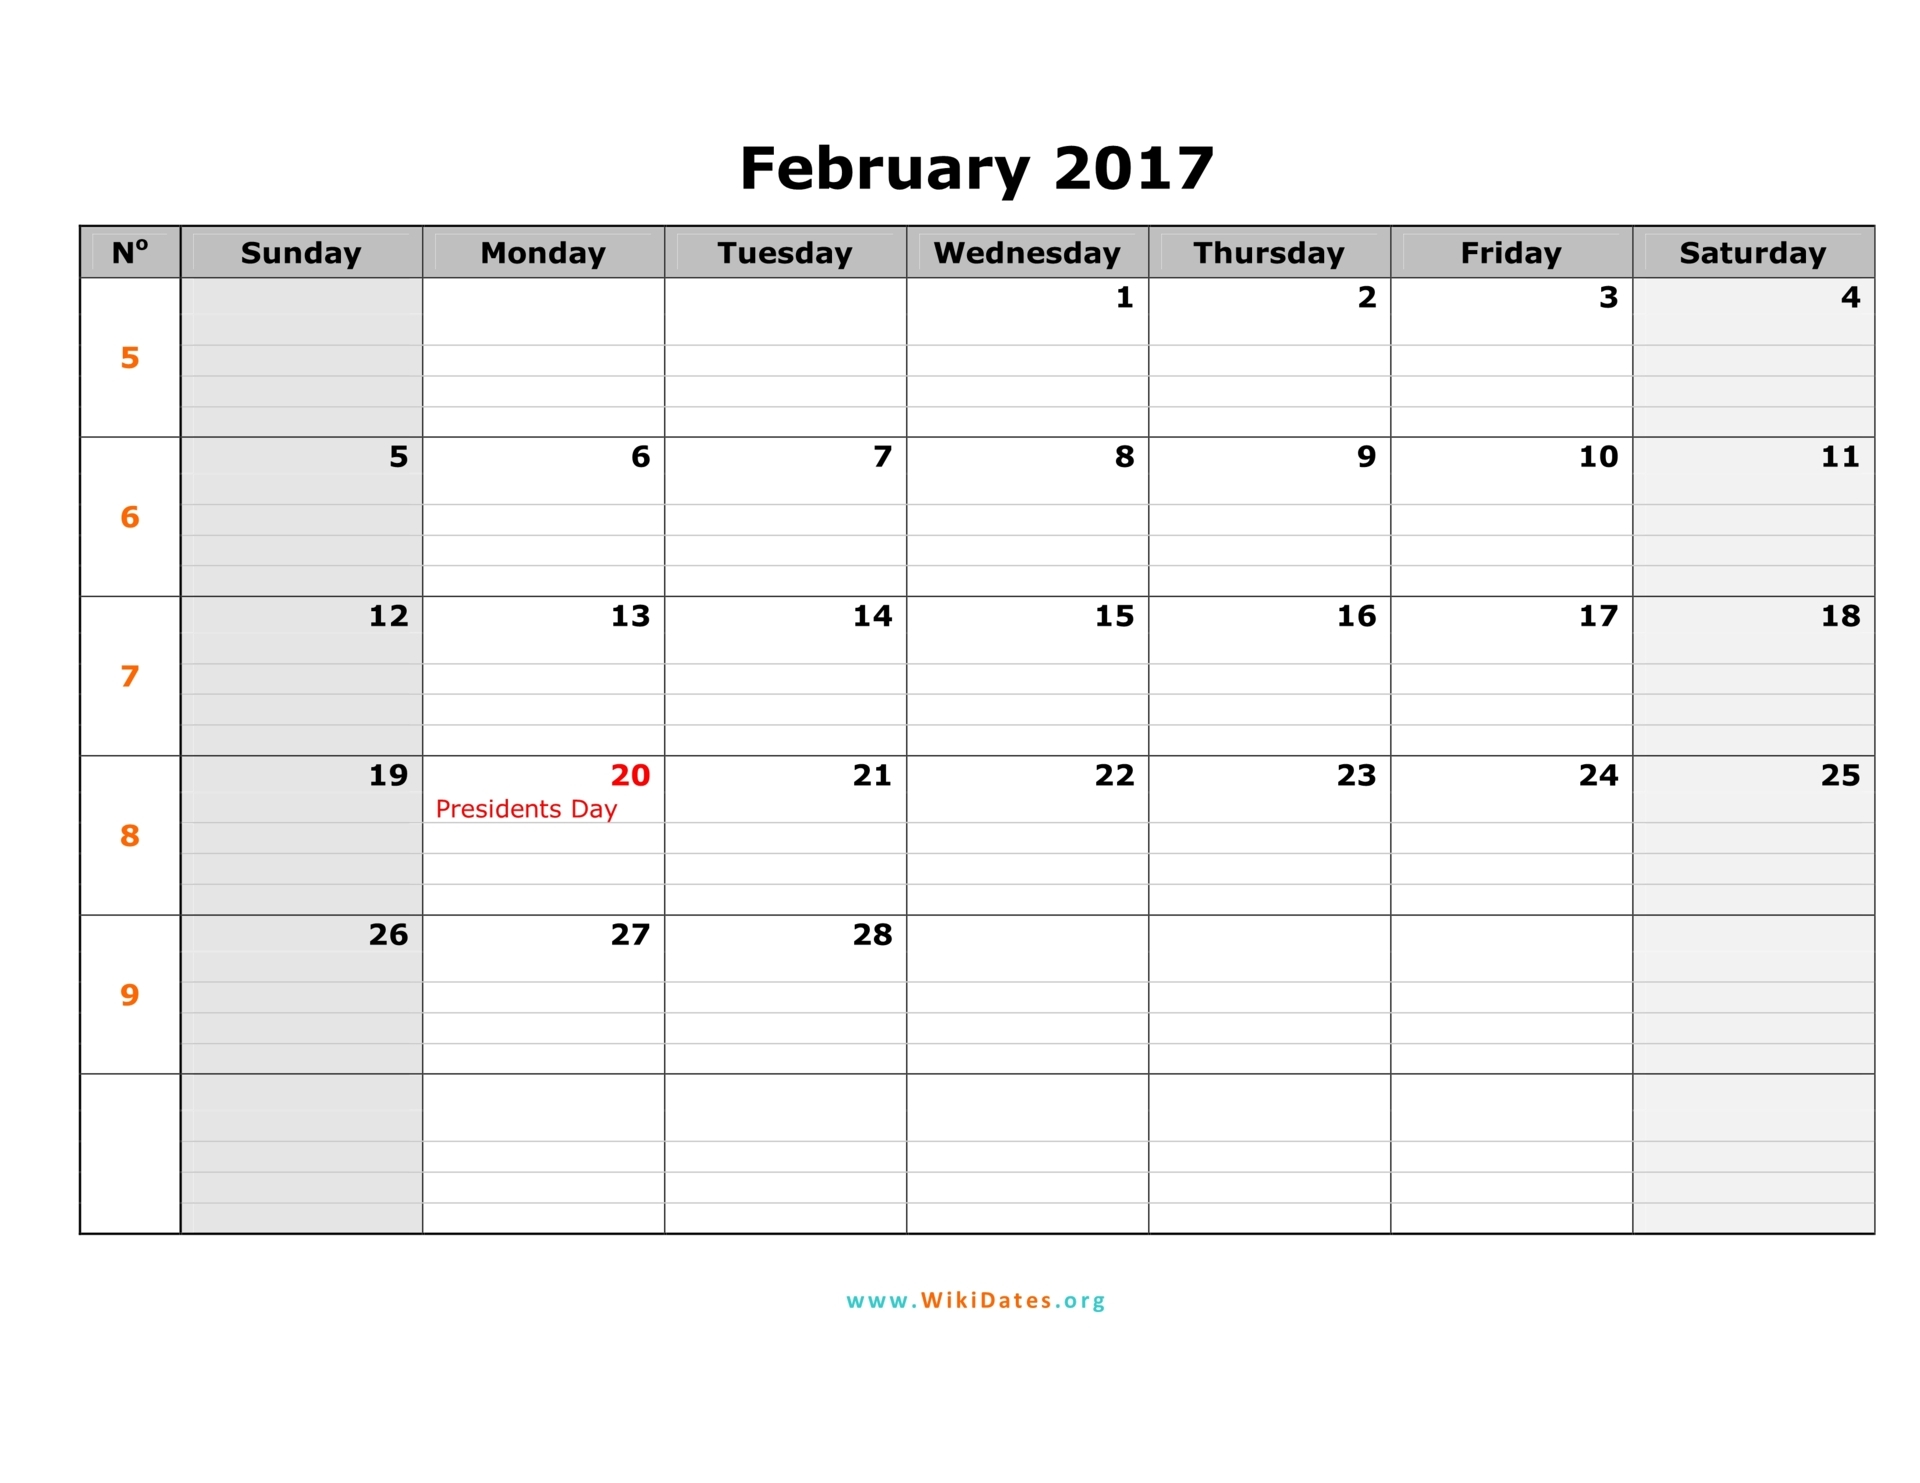 February 2017 Calendar WikiDates org